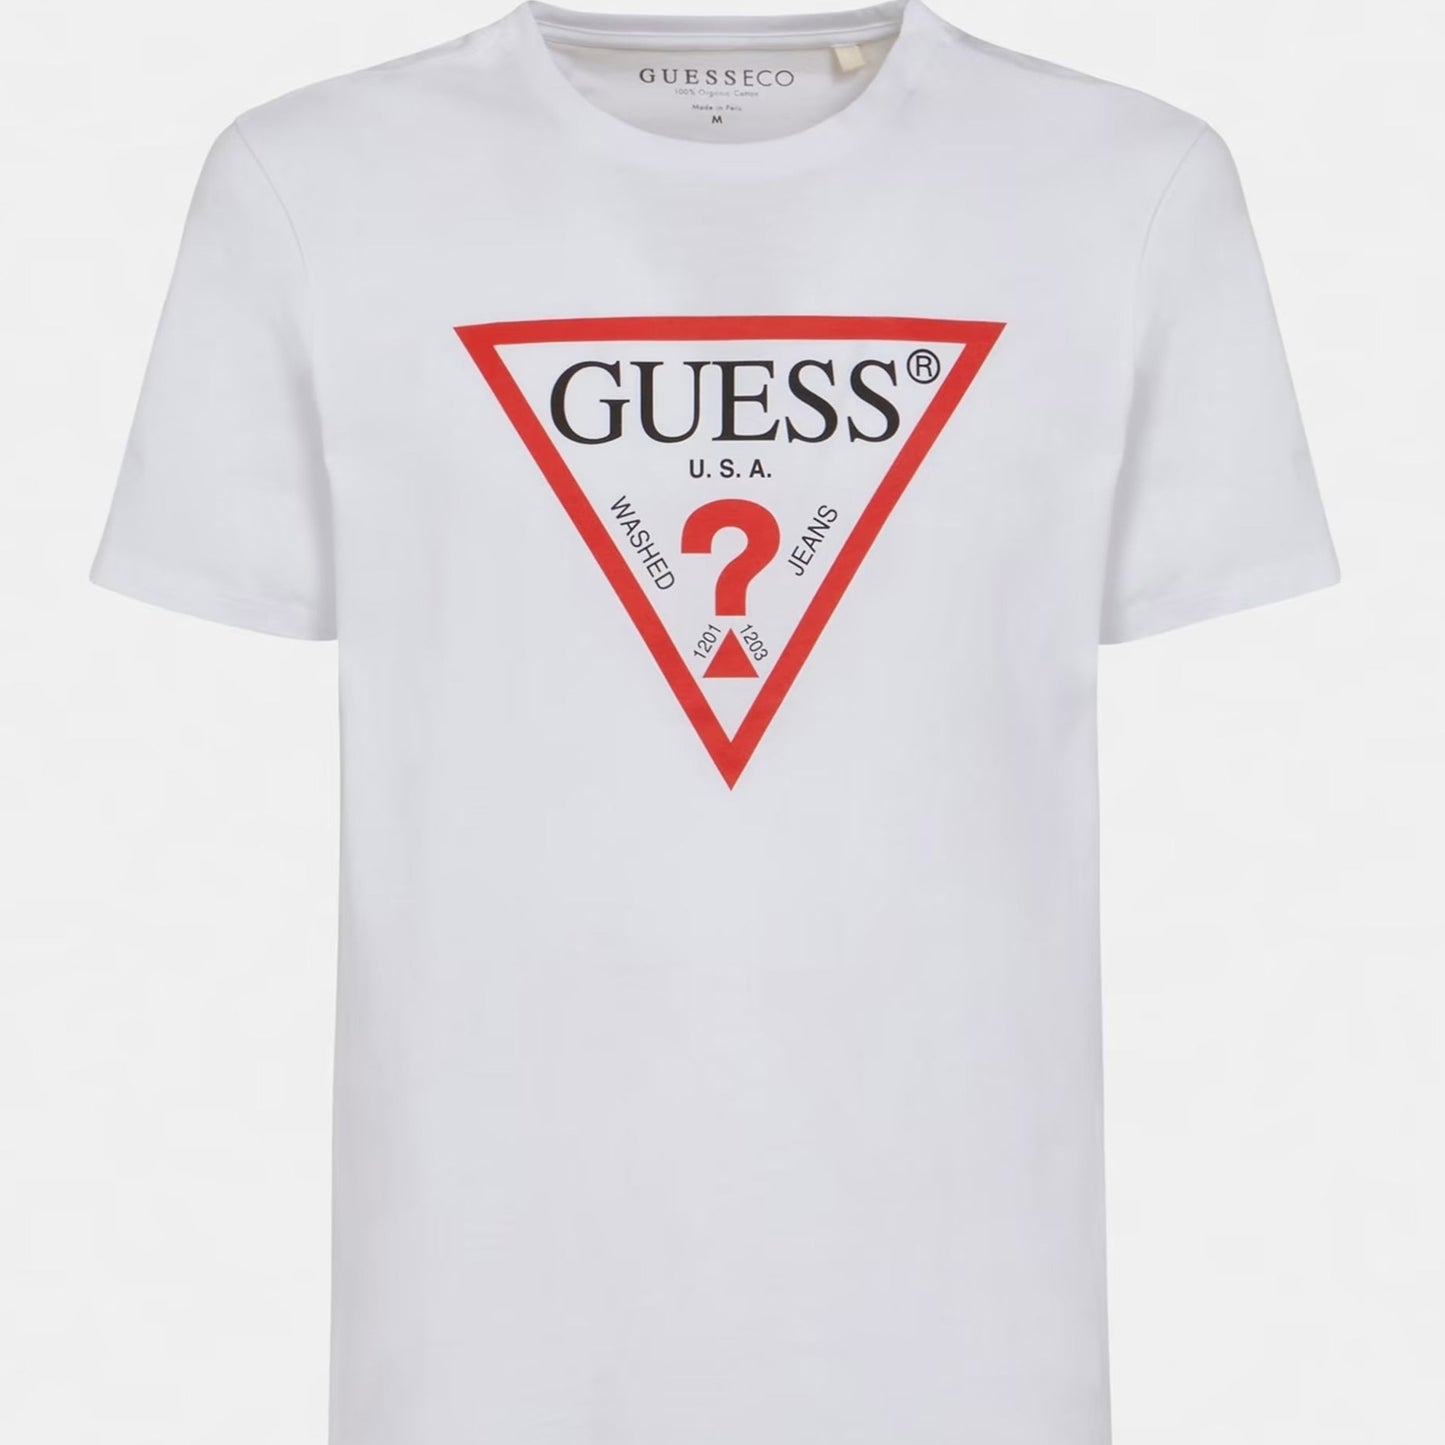 Camiseta Blanca Guess logotipo triángulo